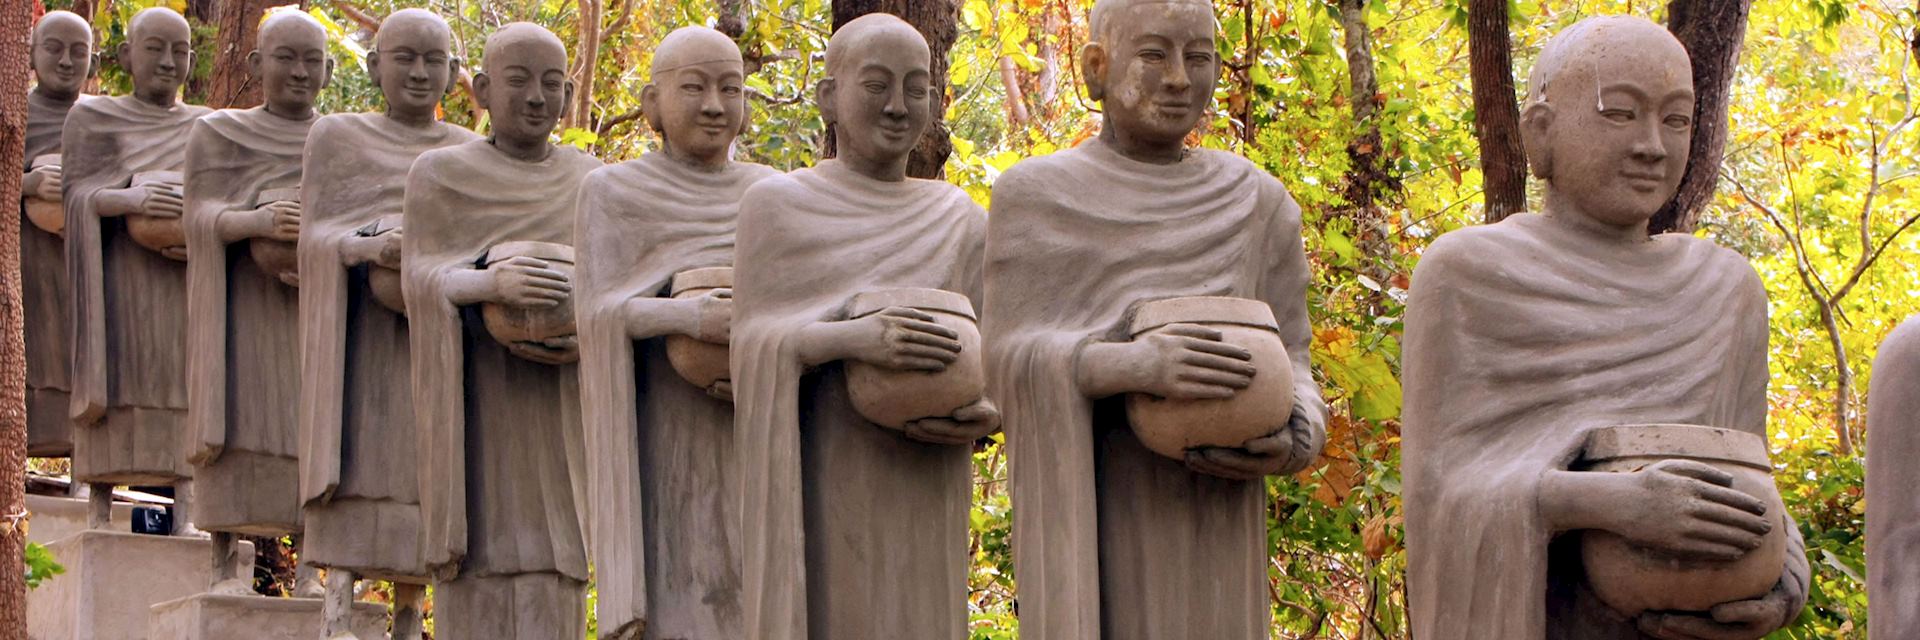 Buddha statues, Kratie